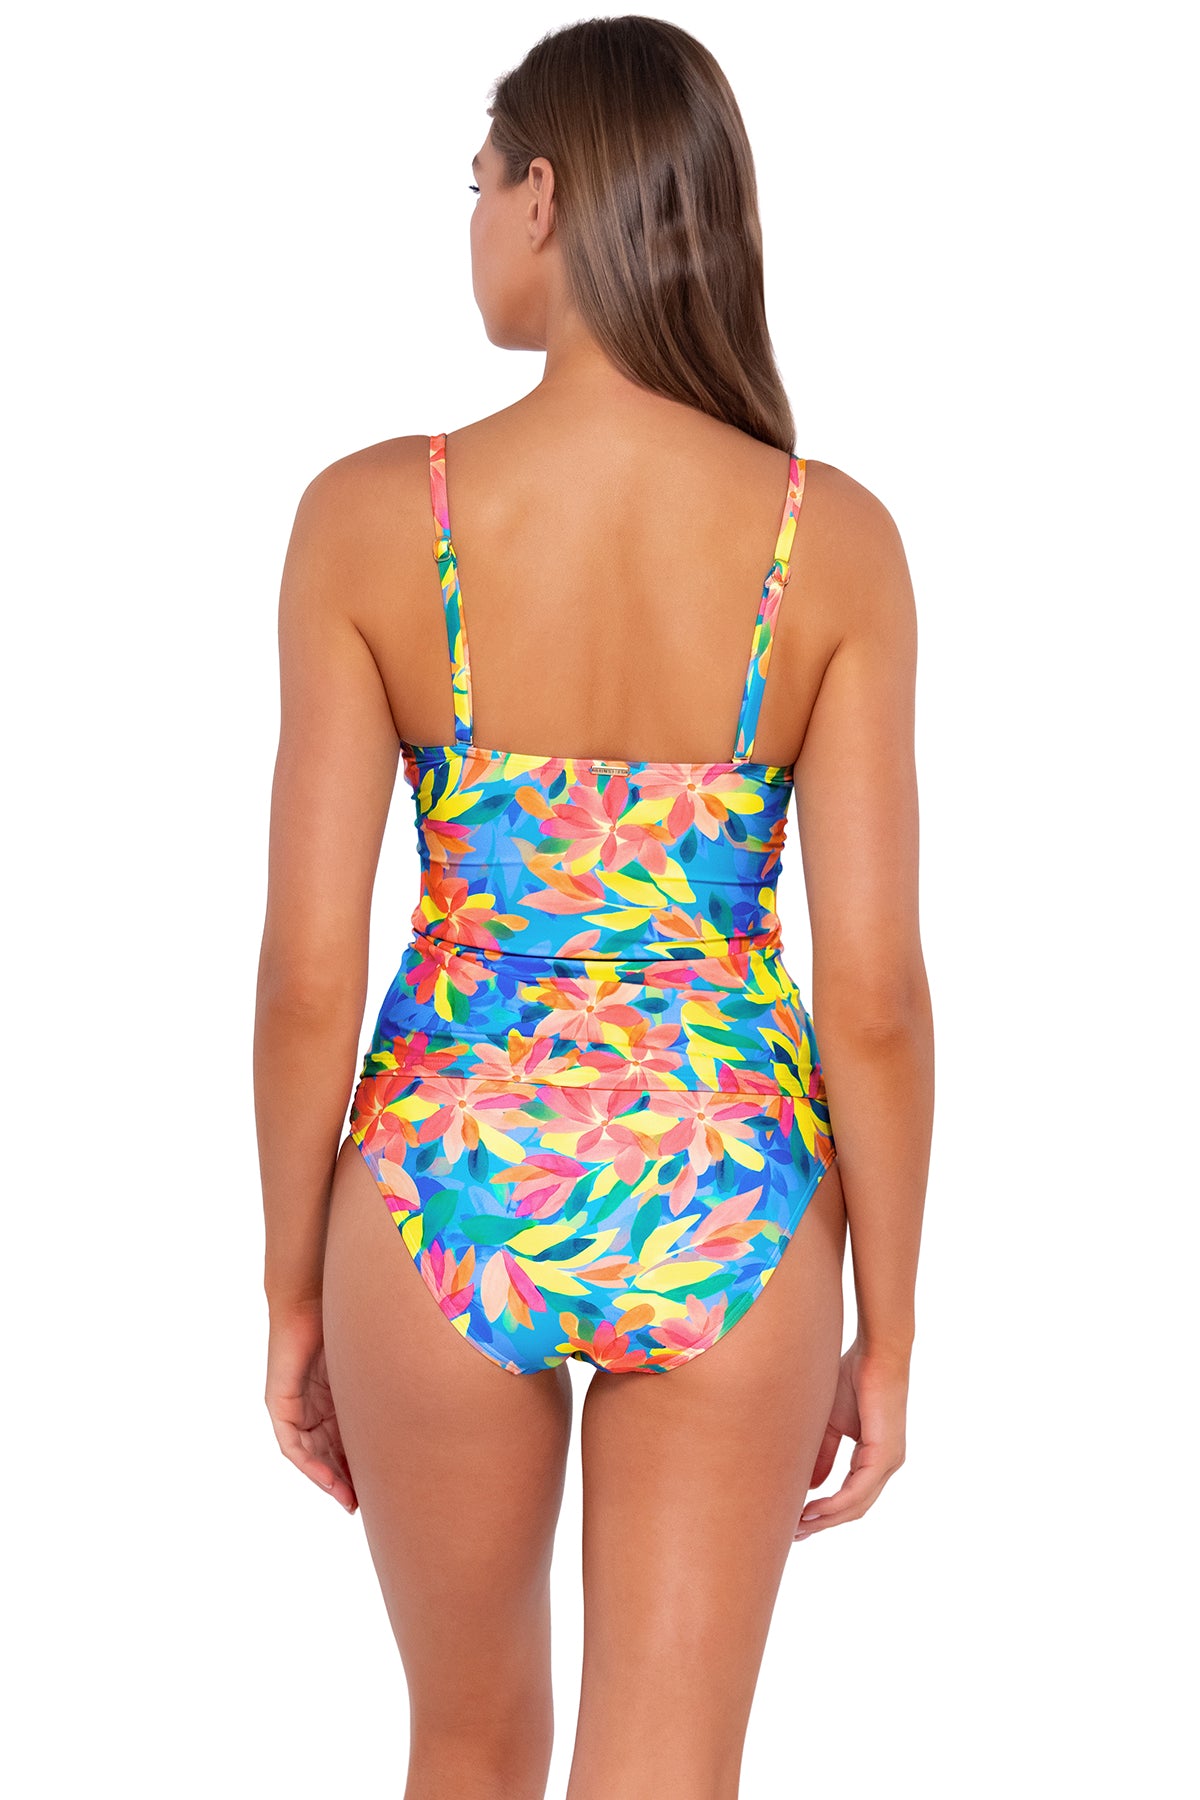 Back pose #1 of Daria wearing Sunsets Shoreline Petals Simone Tankini Top with matching Audra Hipster bikini bottom